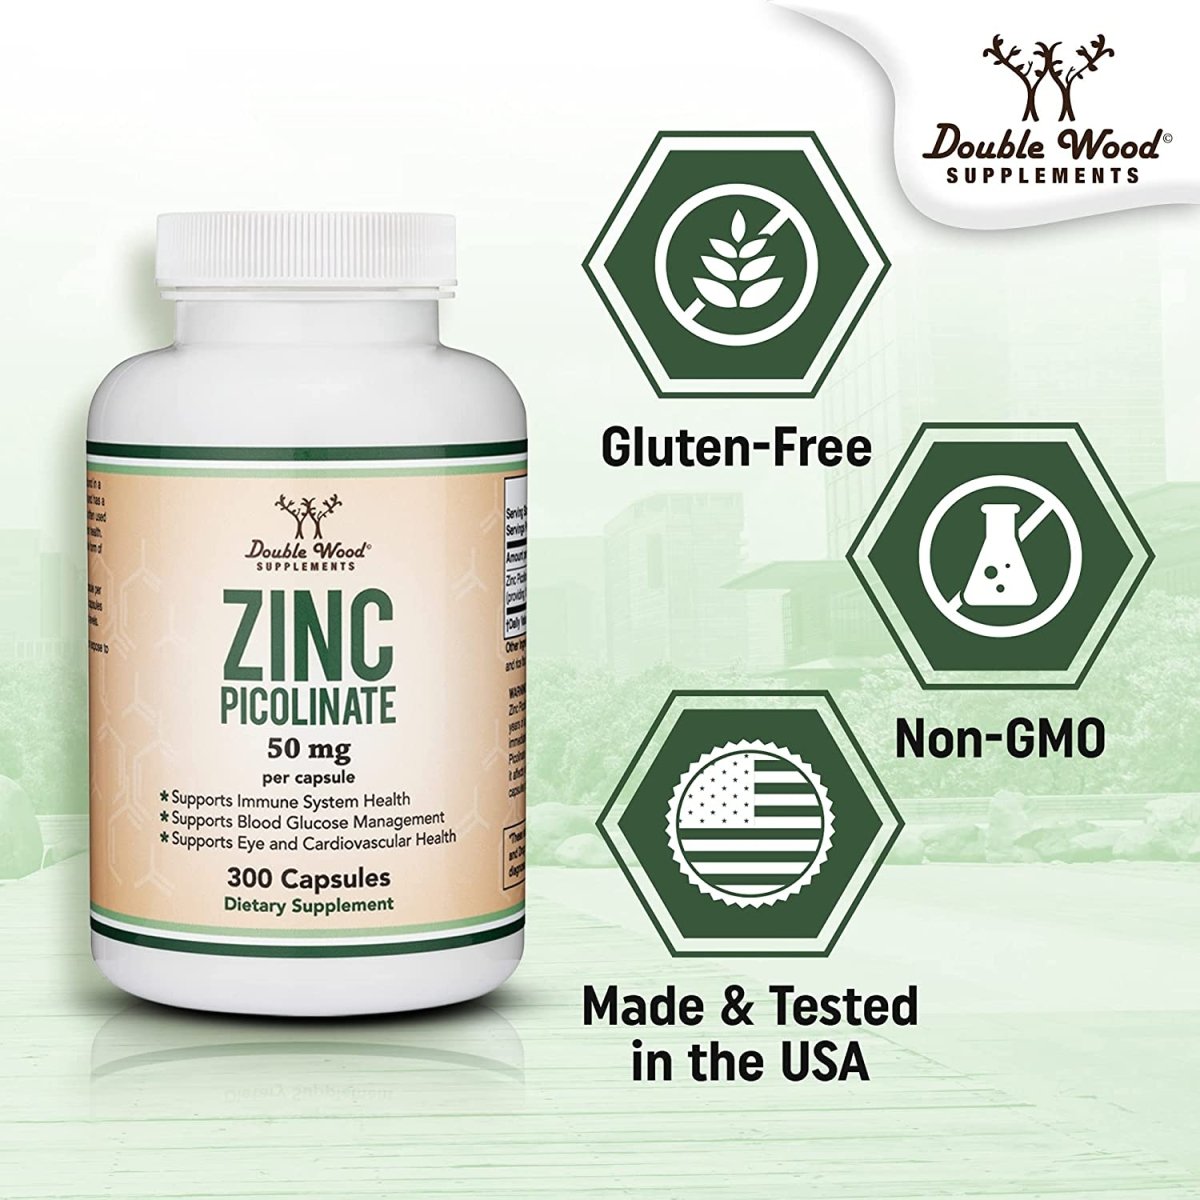 Zinc Picolinate Double Pack - Double Wood Supplements